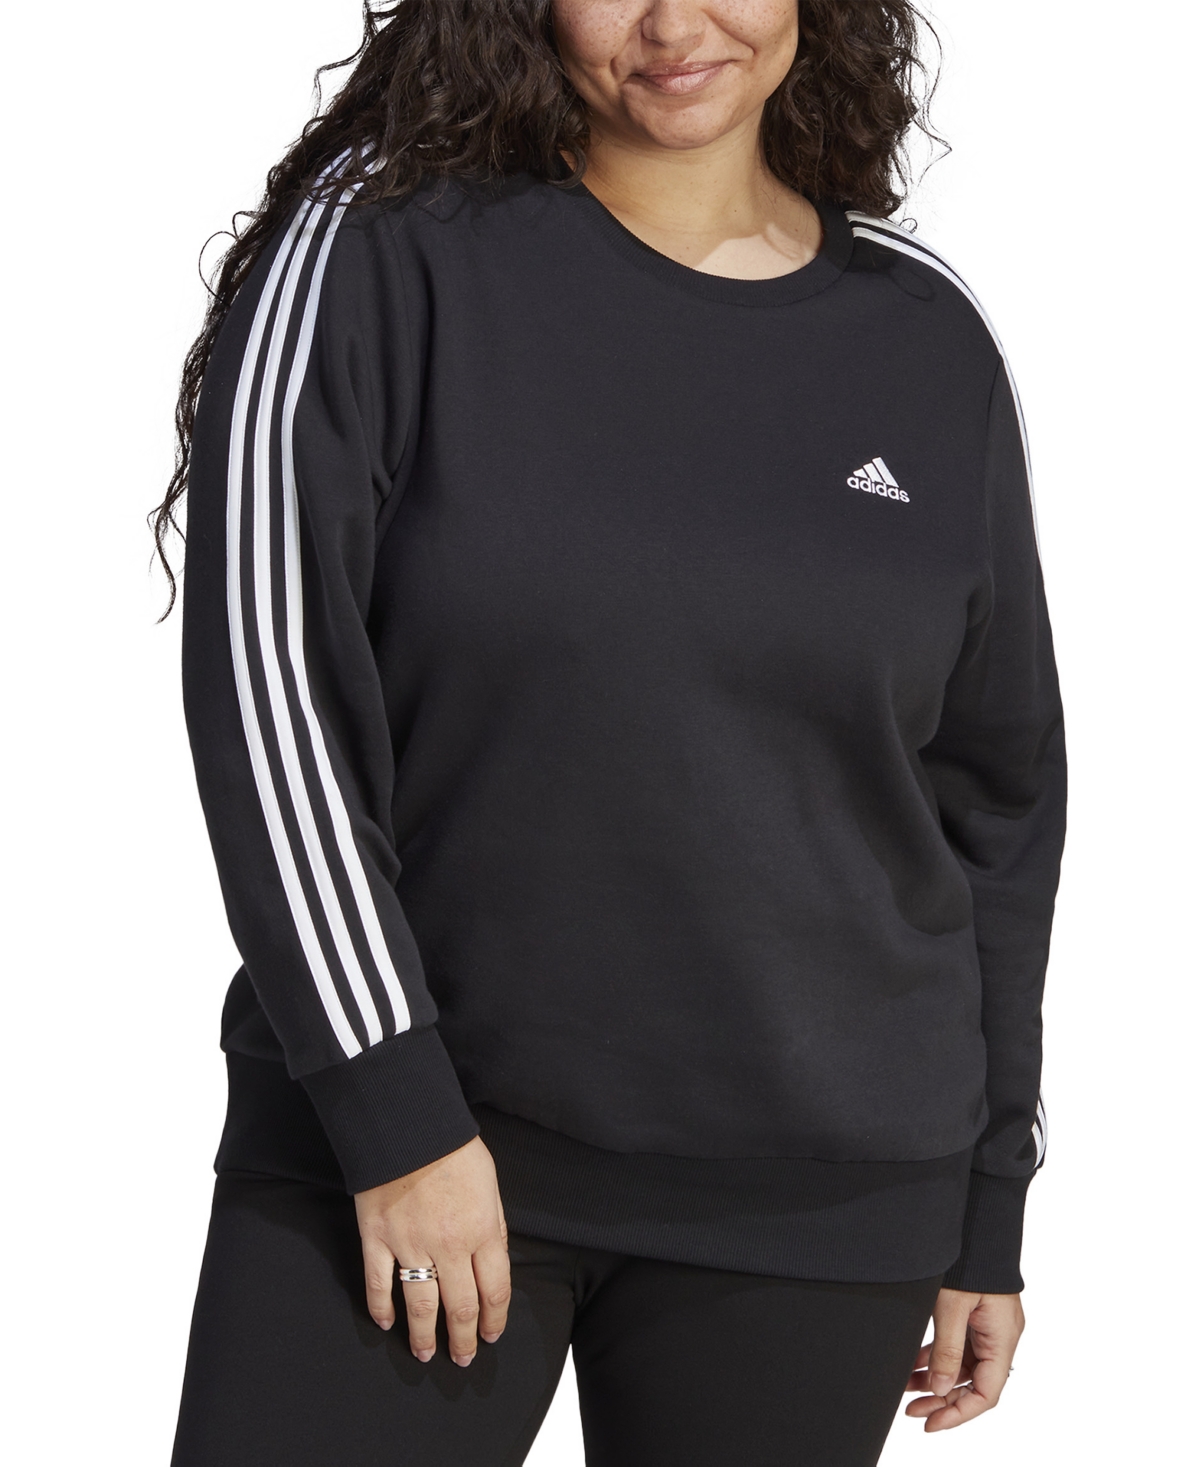 Plus Size 3-Stripes Crewneck Fleece Sweatshirt - Black/white